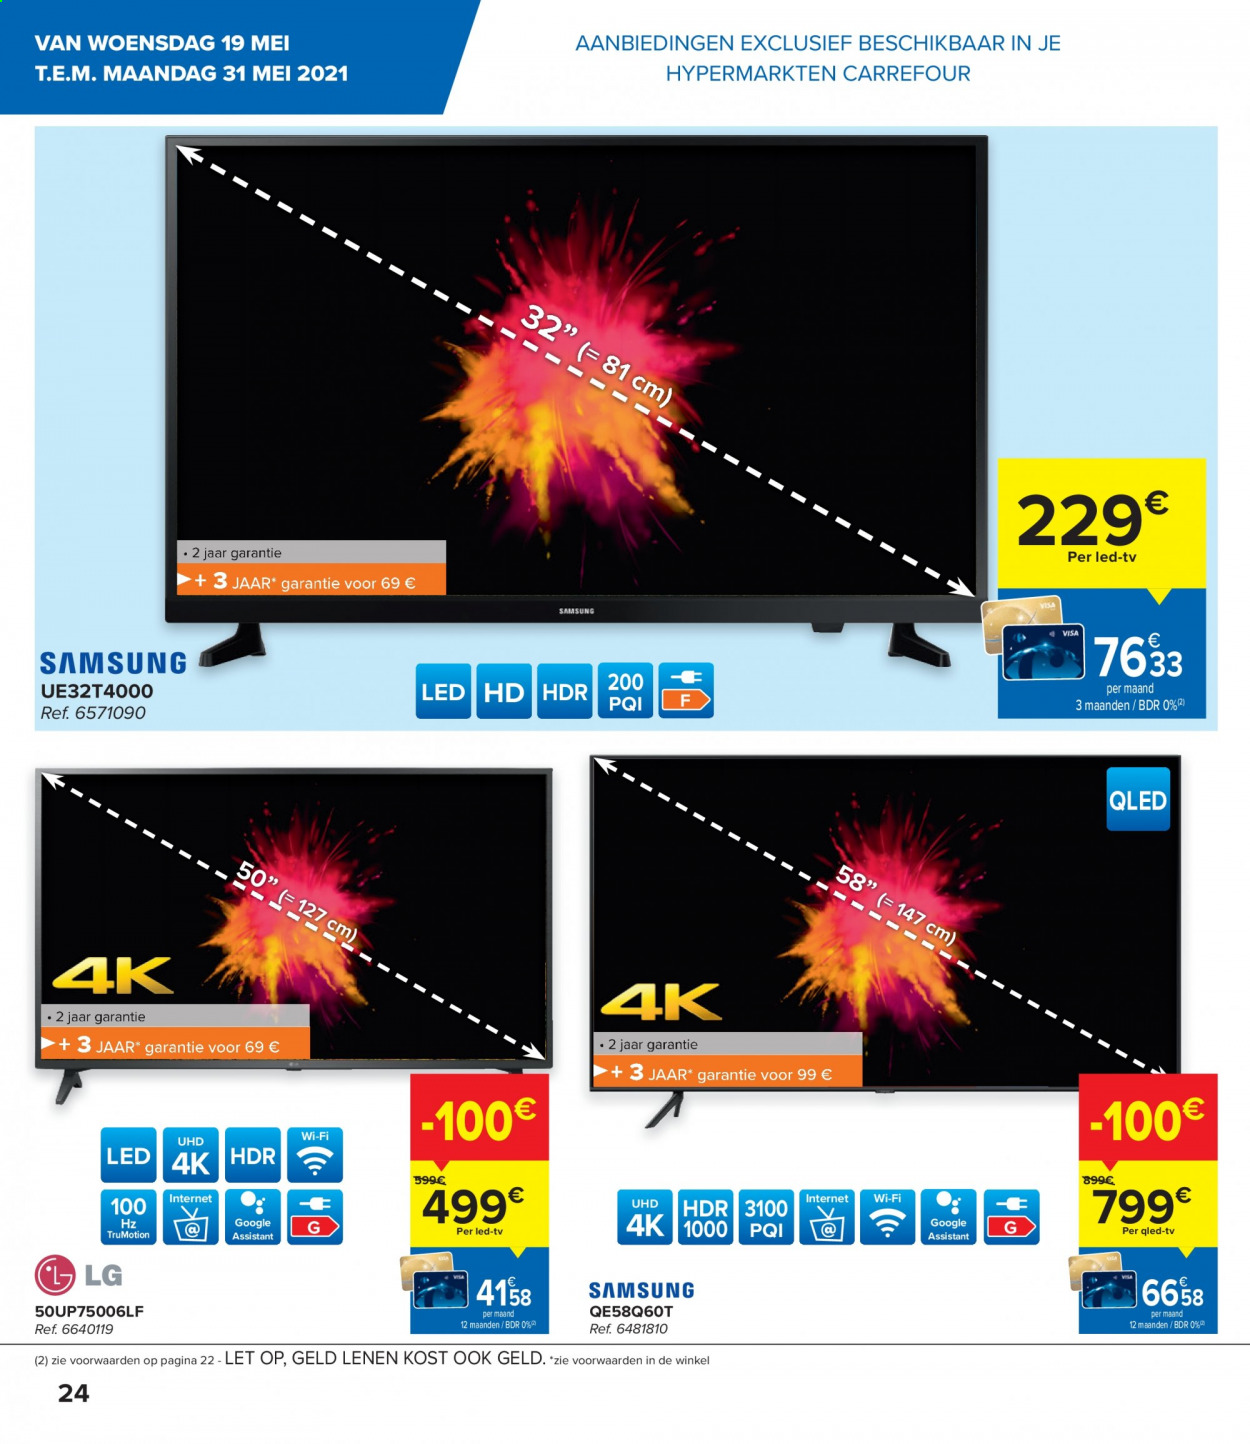 thumbnail - Carrefour hypermarkt-aanbieding - 19/05/2021 - 31/05/2021 -  producten in de aanbieding - TV, LG, Samsung. Pagina 4.